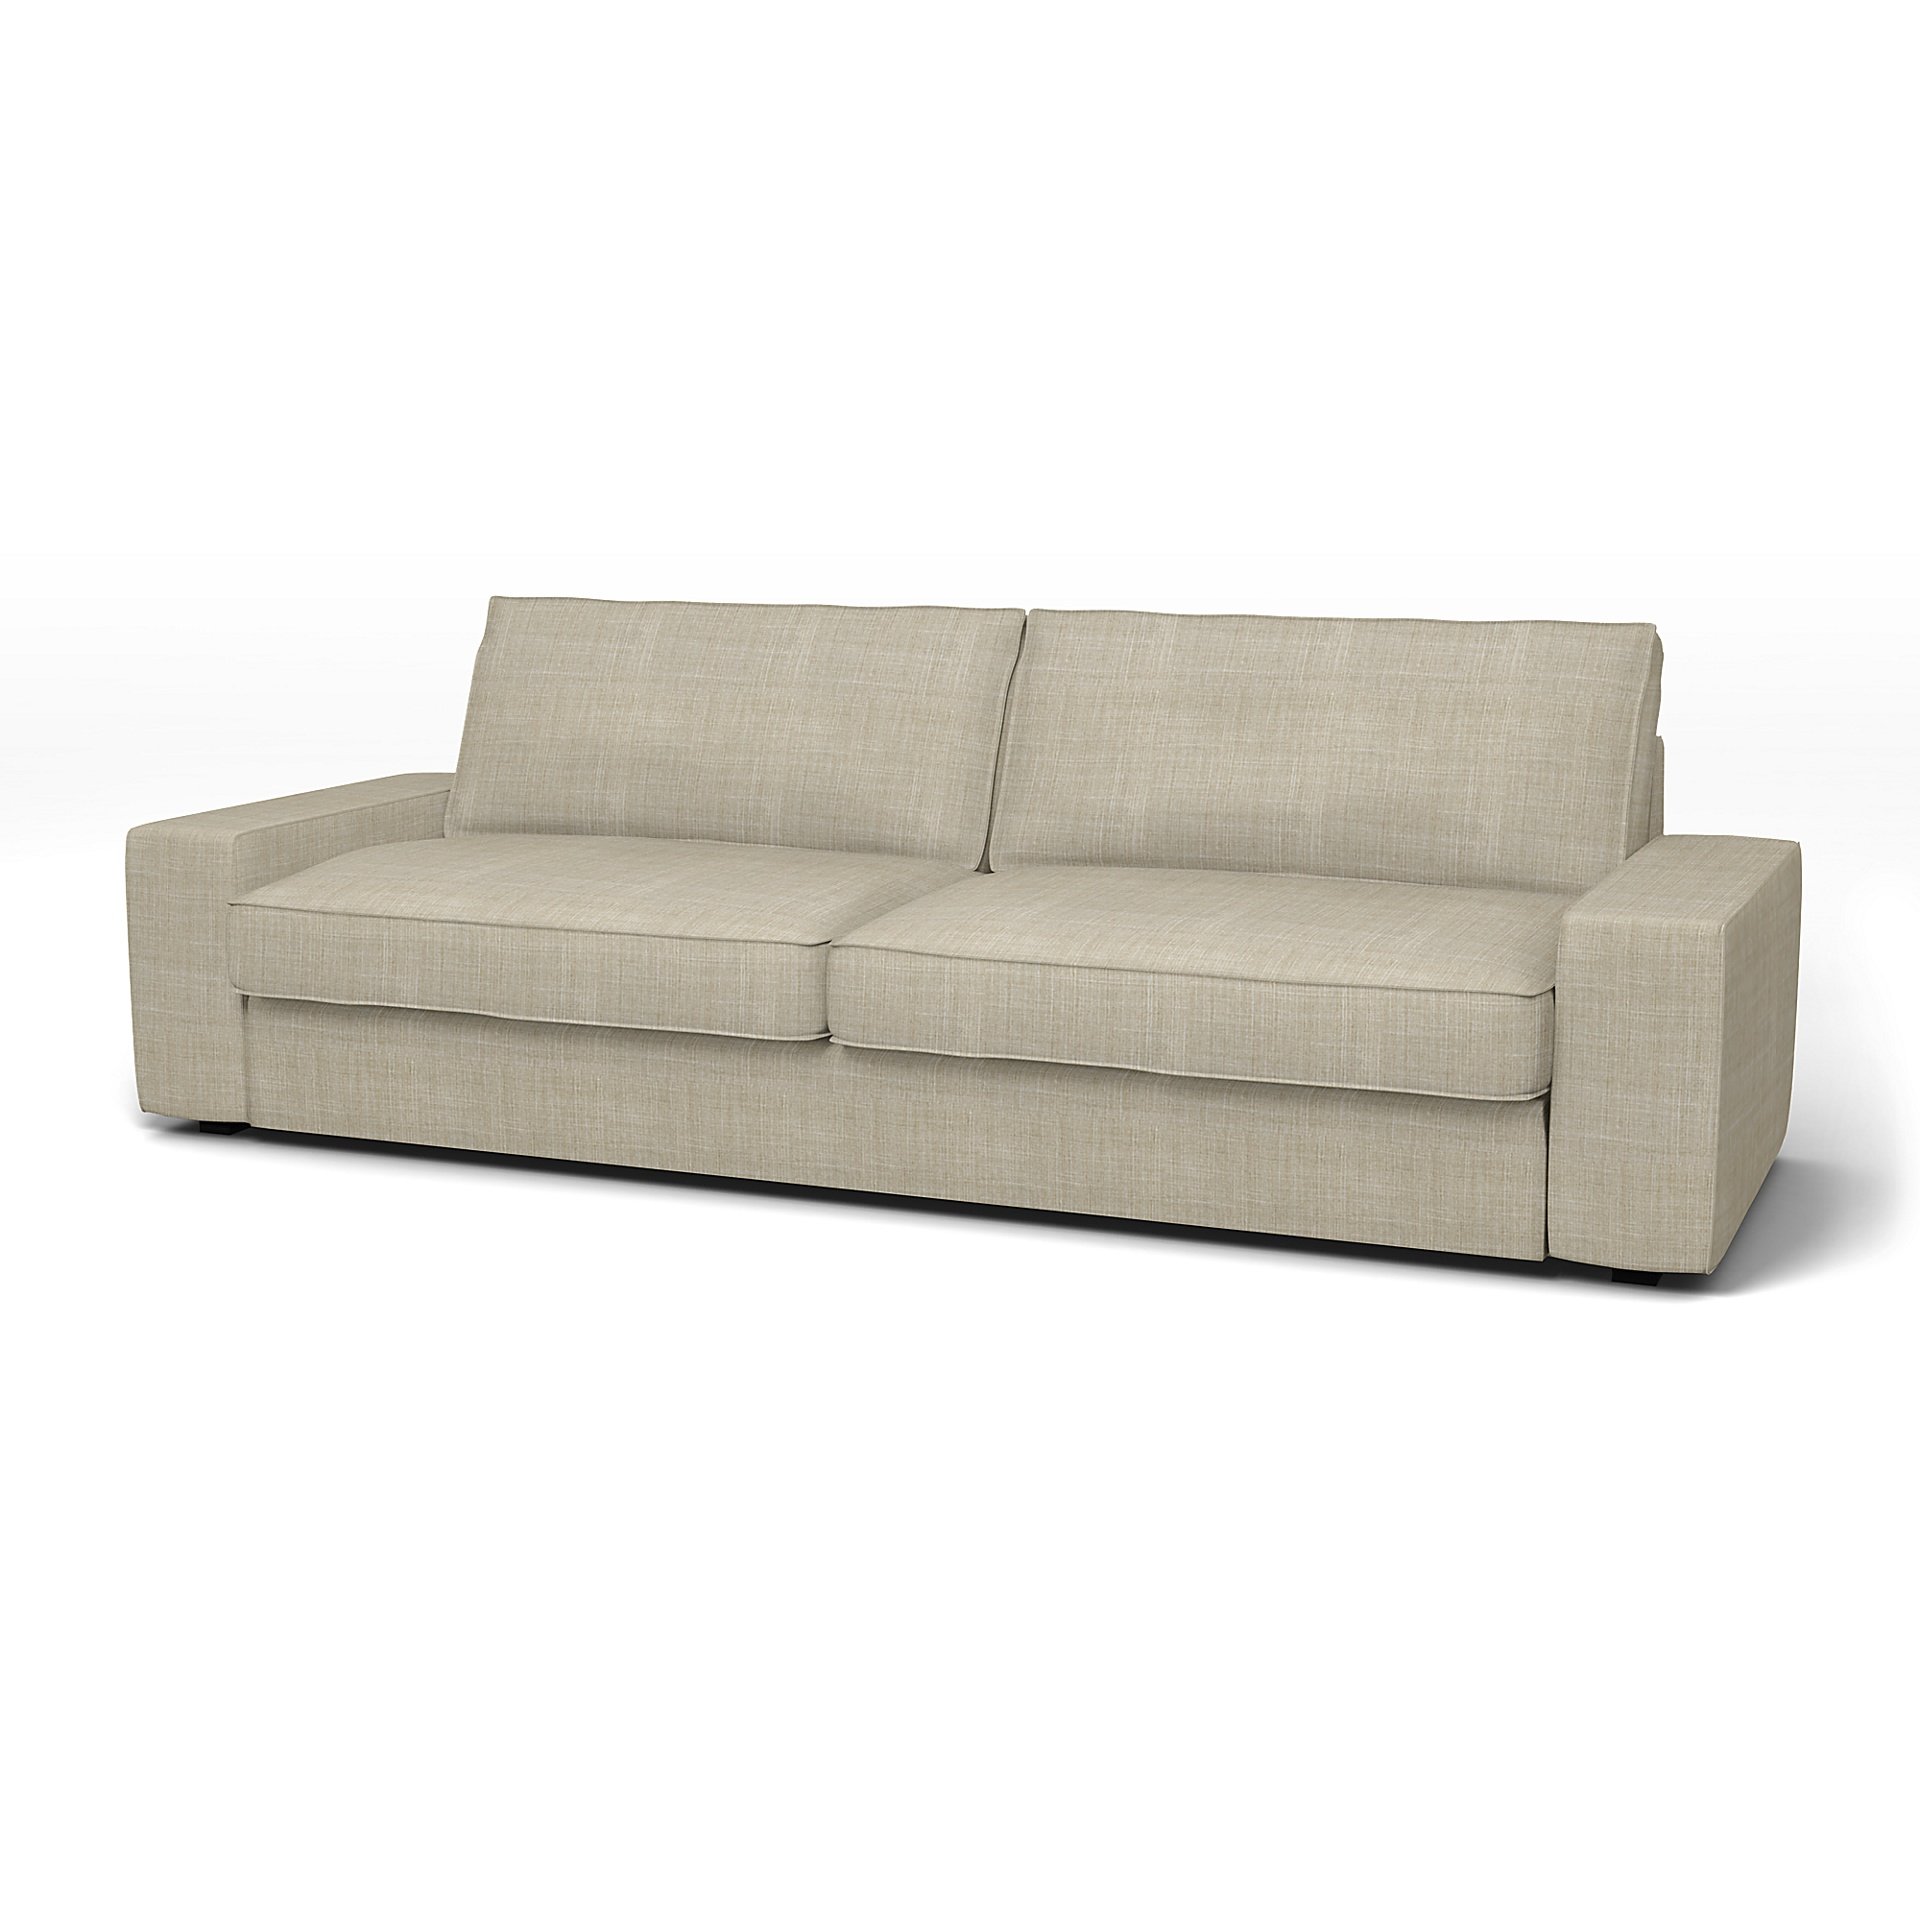 IKEA - Kivik Sofa Bed Cover, Sand Beige, Boucle & Texture - Bemz